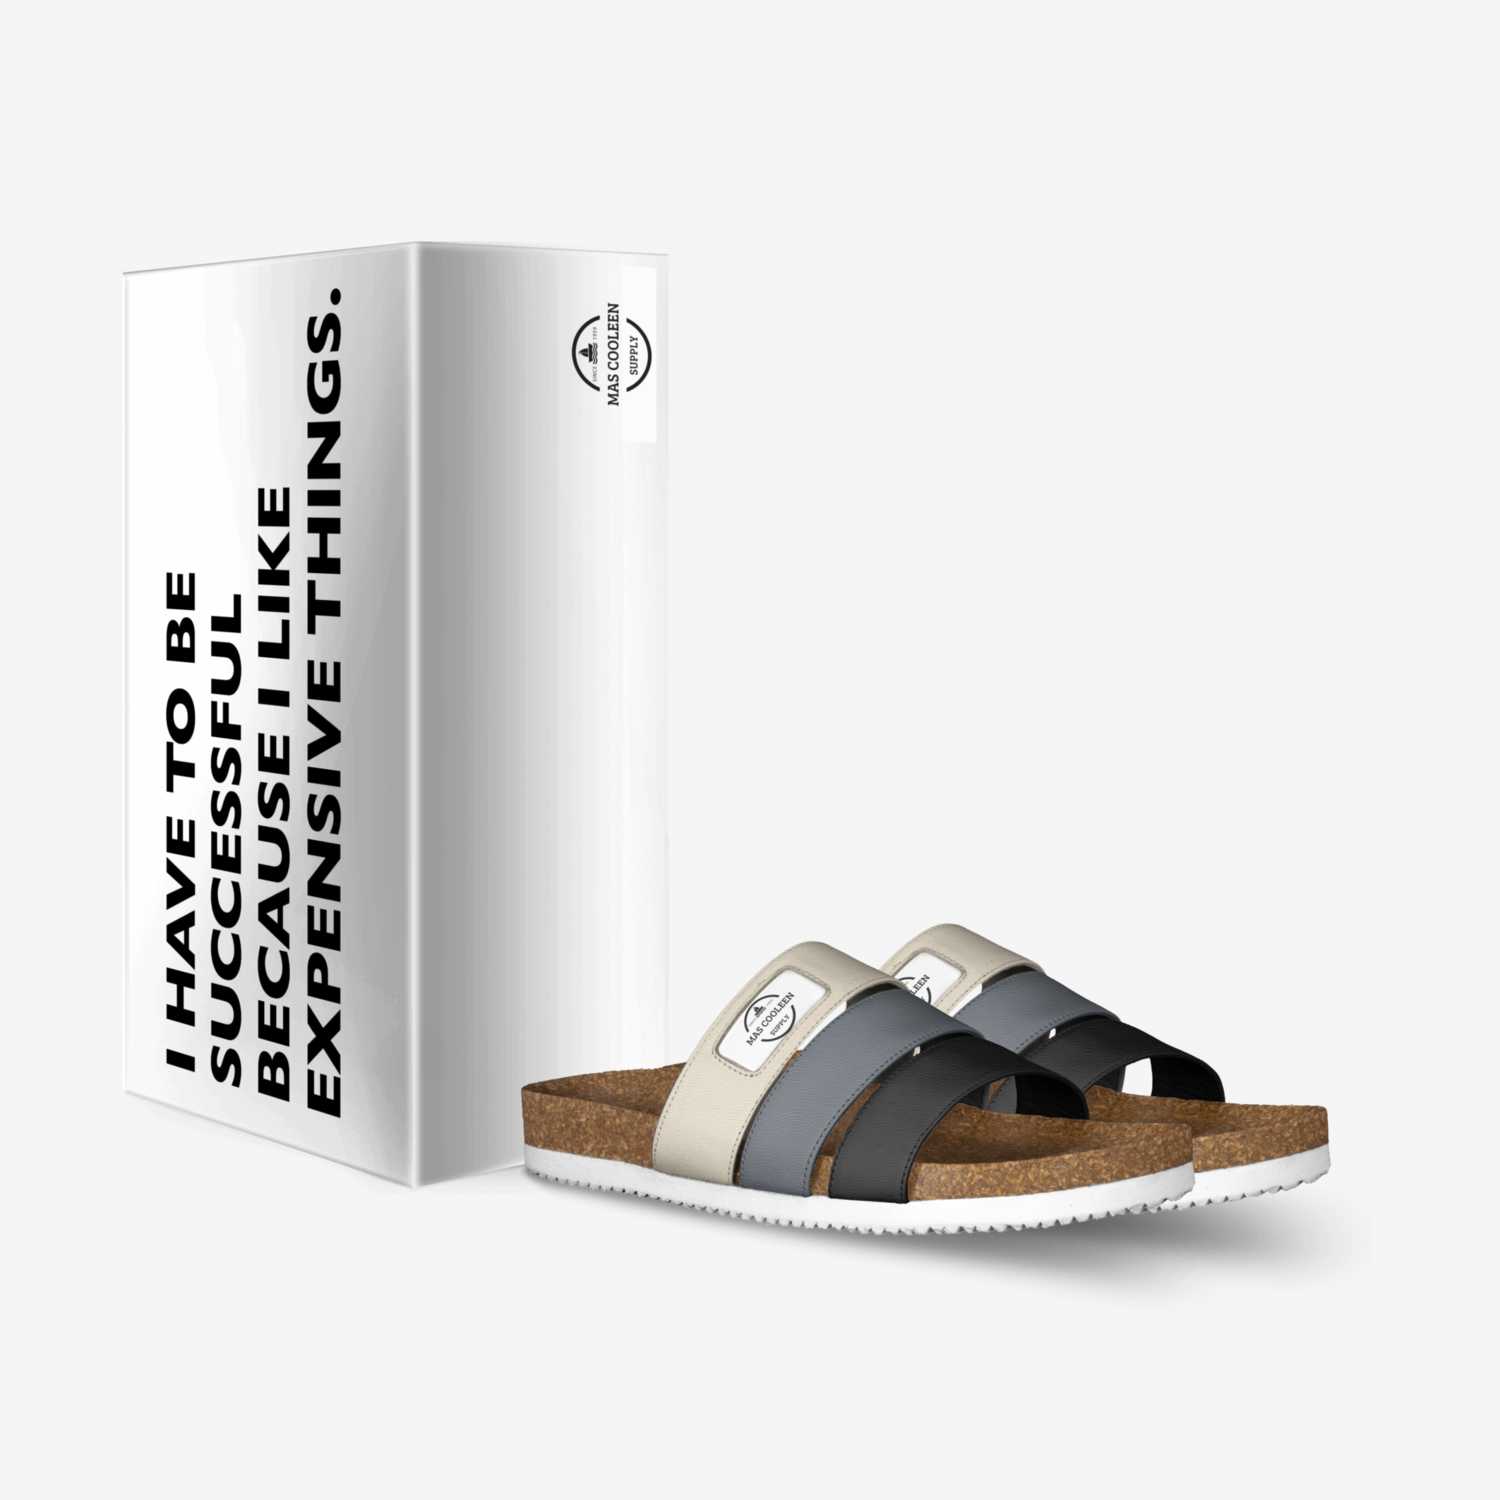 Mas Cooleen custom made in Italy shoes by Kurniawan Ramadhan | Box view